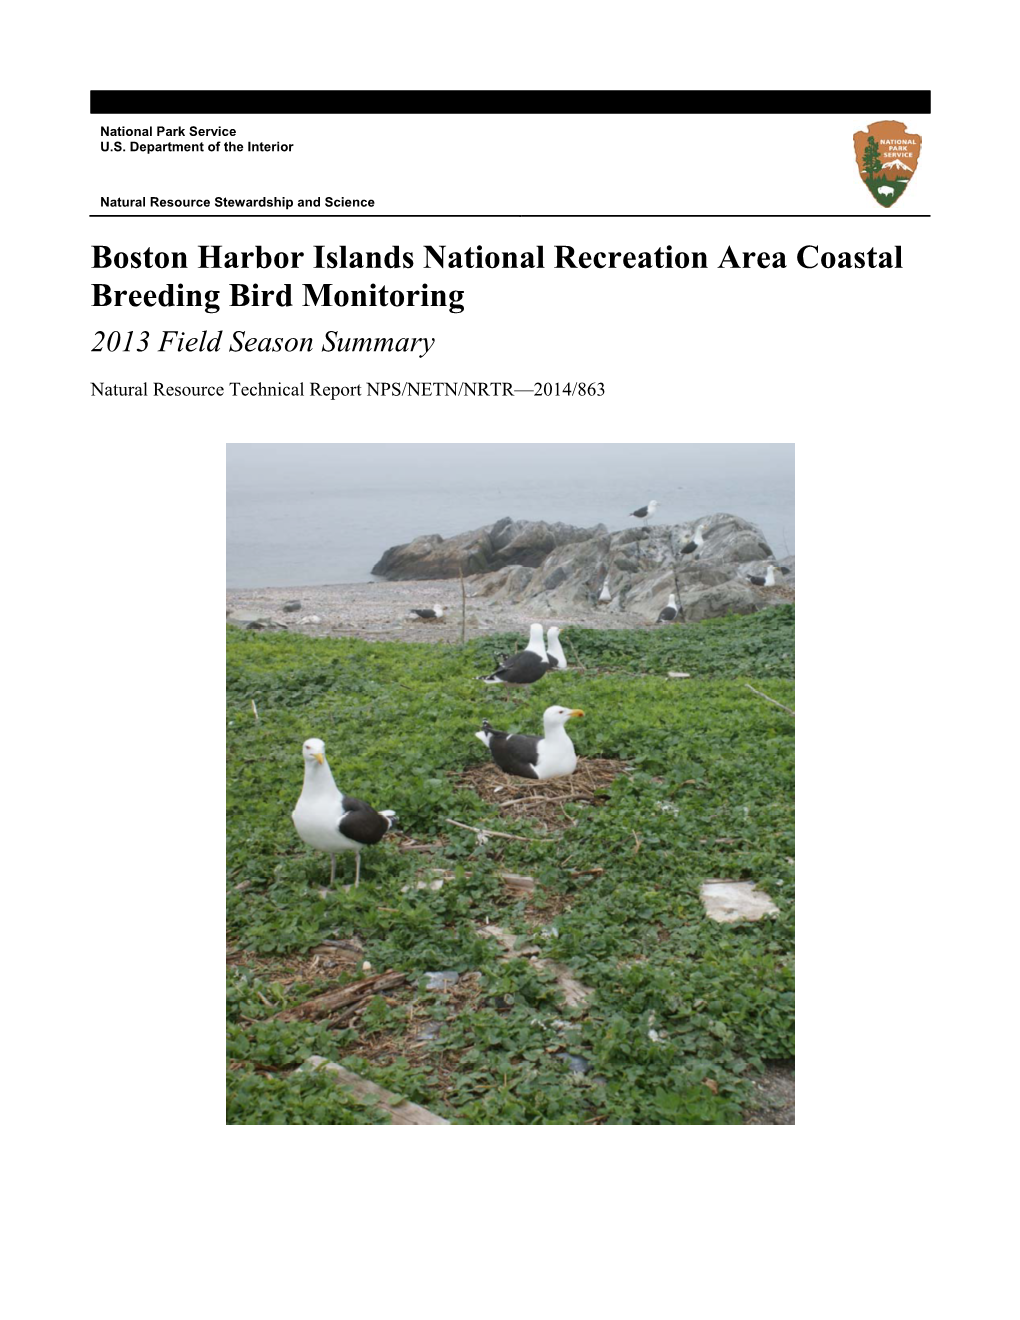 Boston Harbor Islands National Recreation Area Coastal Breeding Bird Monitoring 2013 Field Season Summary